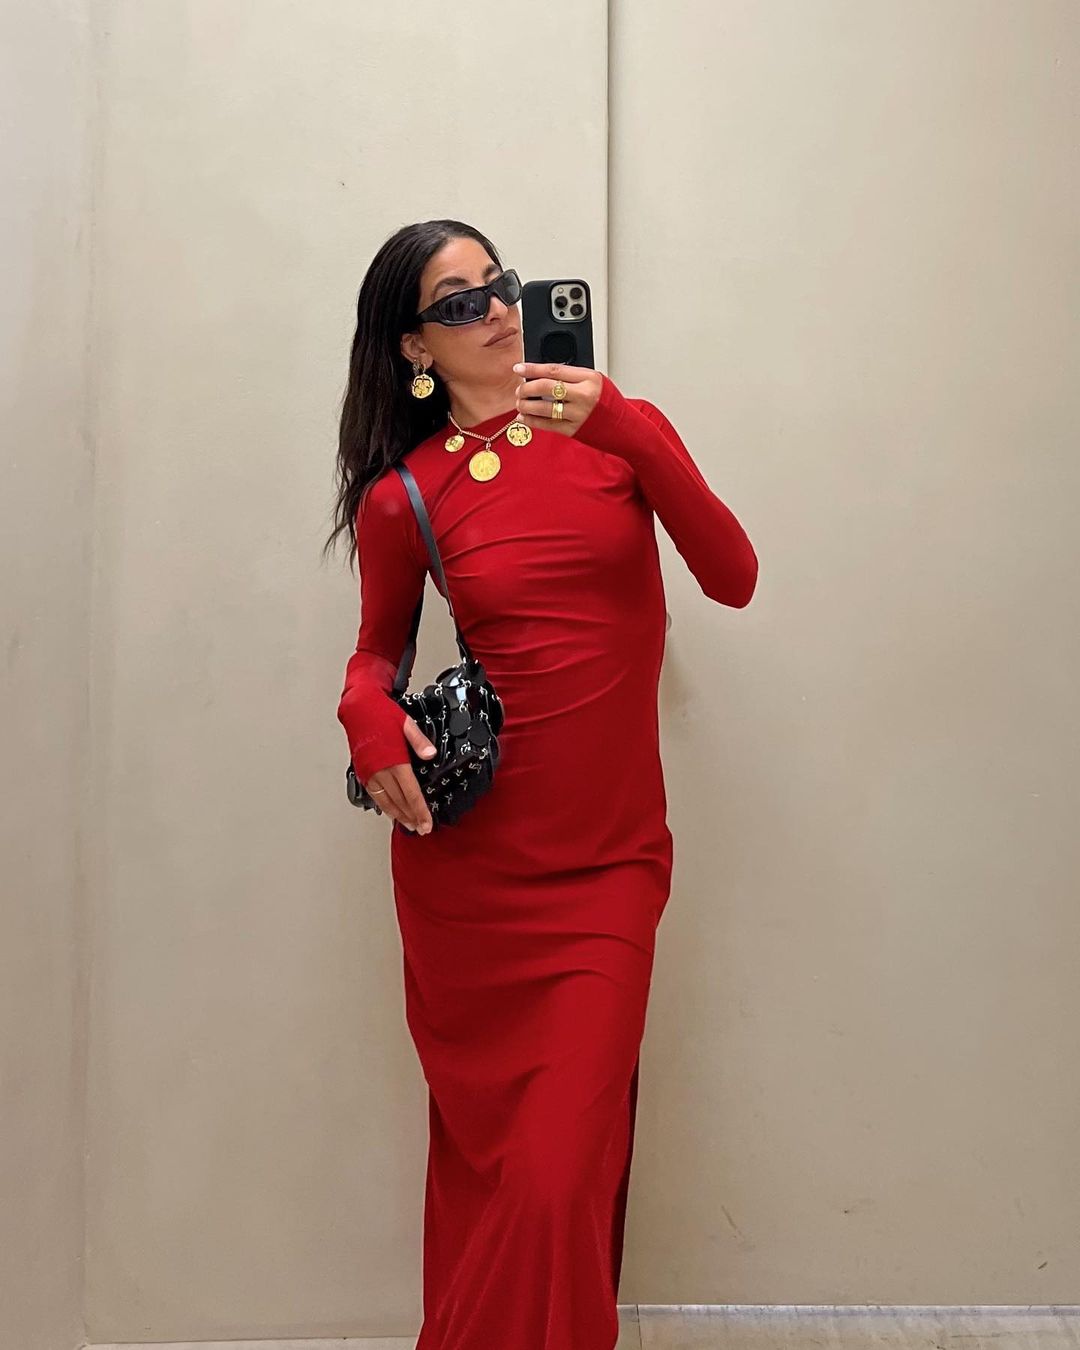 љубав, but make it fashion: Crvena haljina je uvek dobar izbor